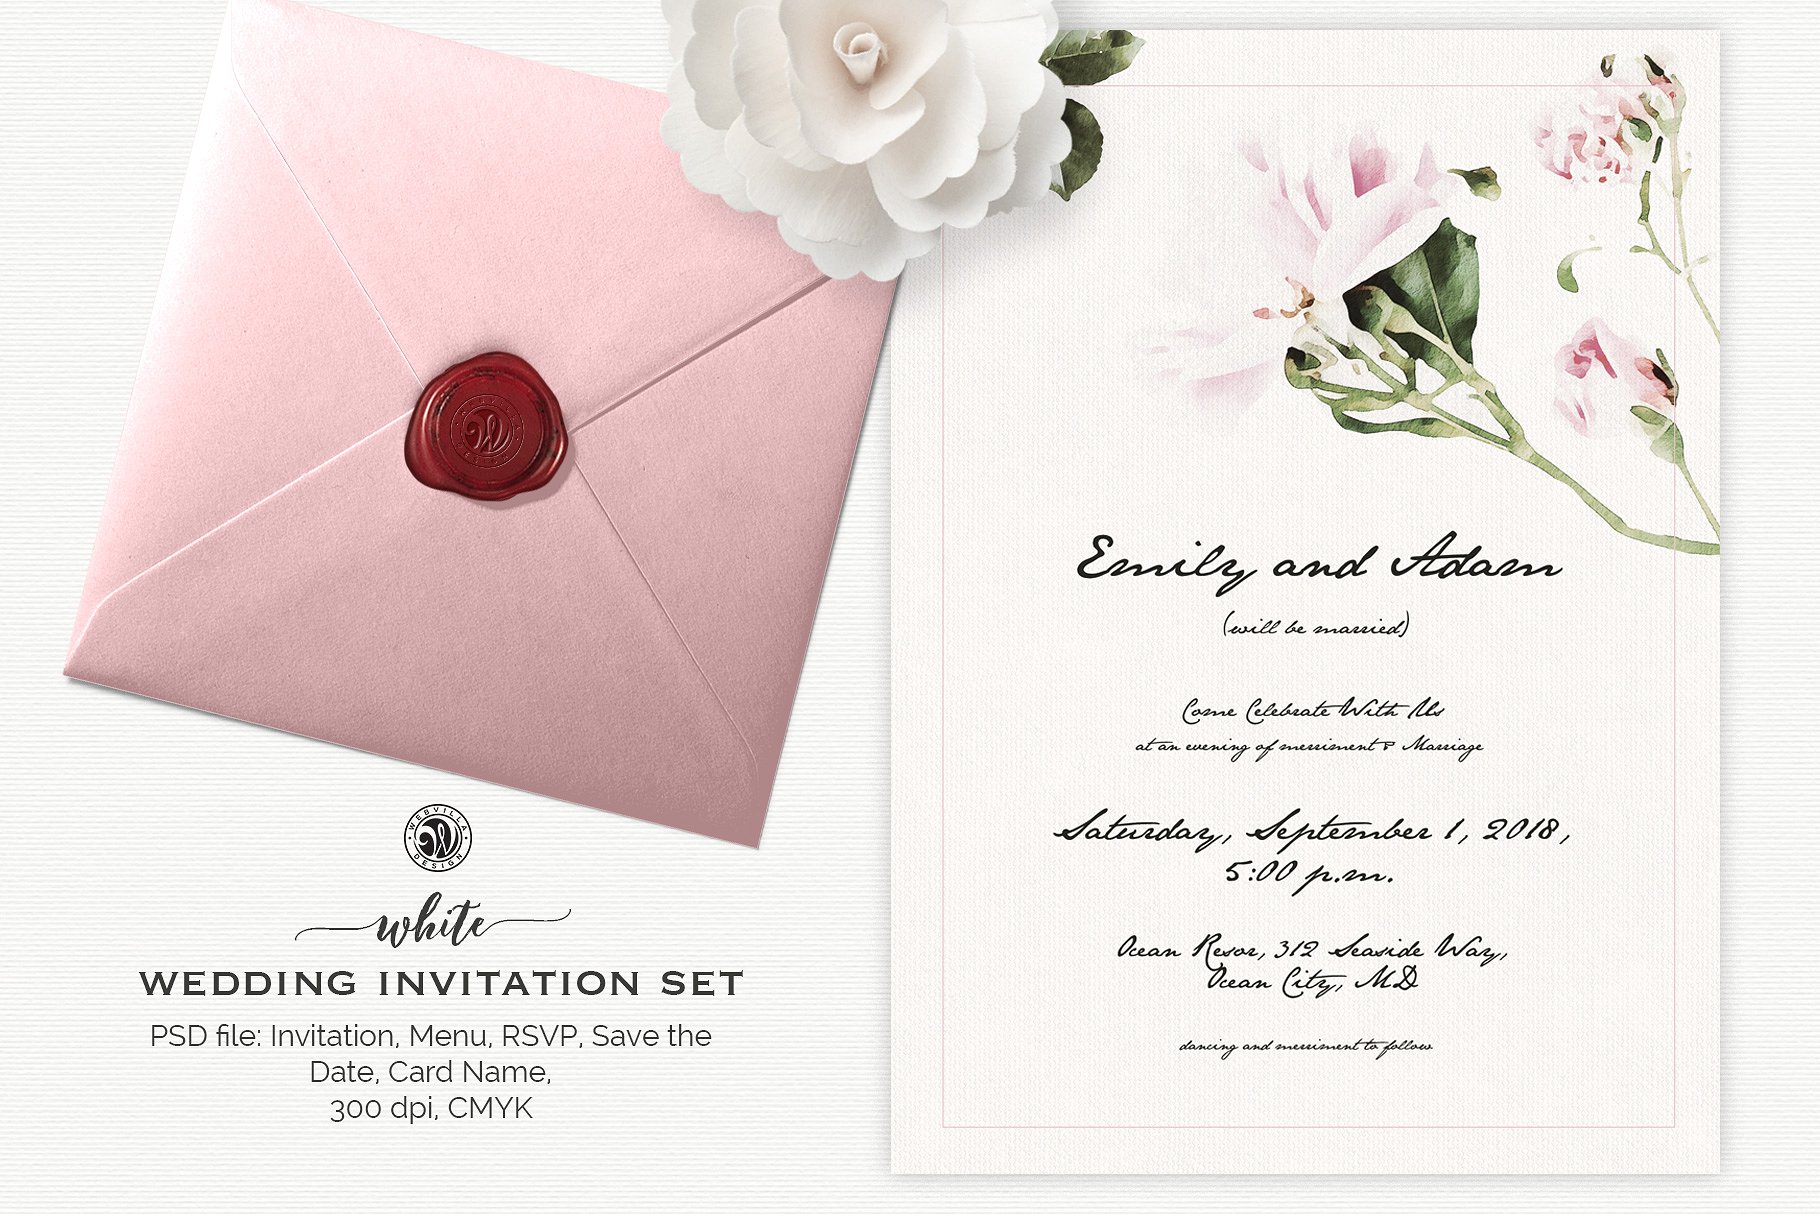 白色结婚邀请函设计模板素材 White Wedding Invitation Set插图